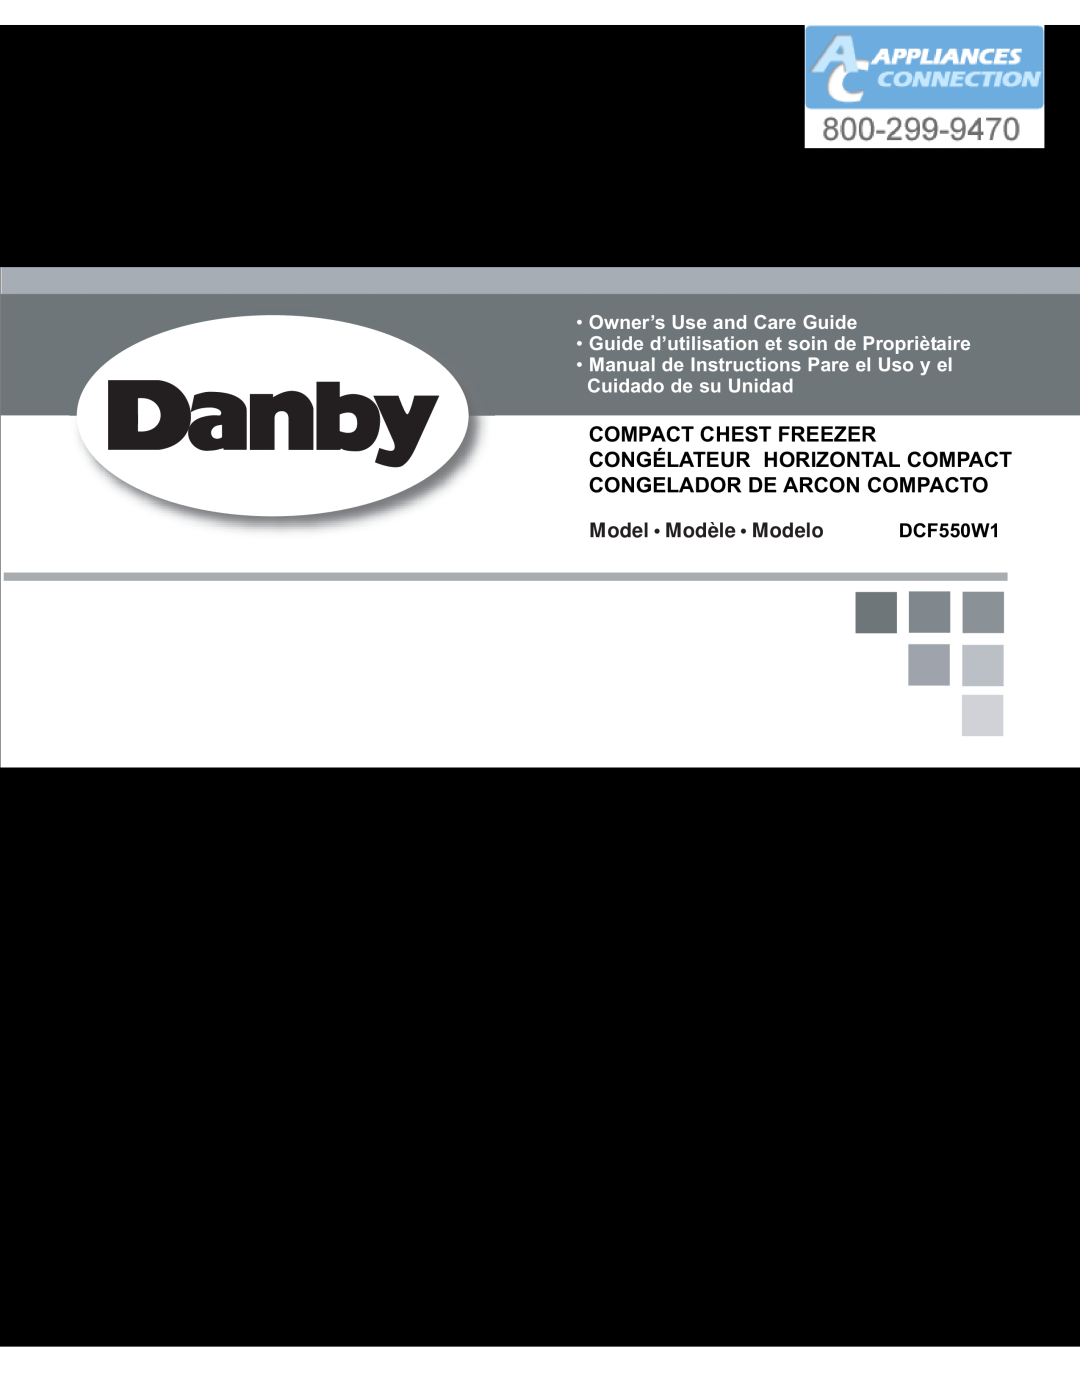 Danby DCF550W1 manual Compact Chest Freezer Congélateur Horizontal Compact, Congelador De Arcon Compacto 